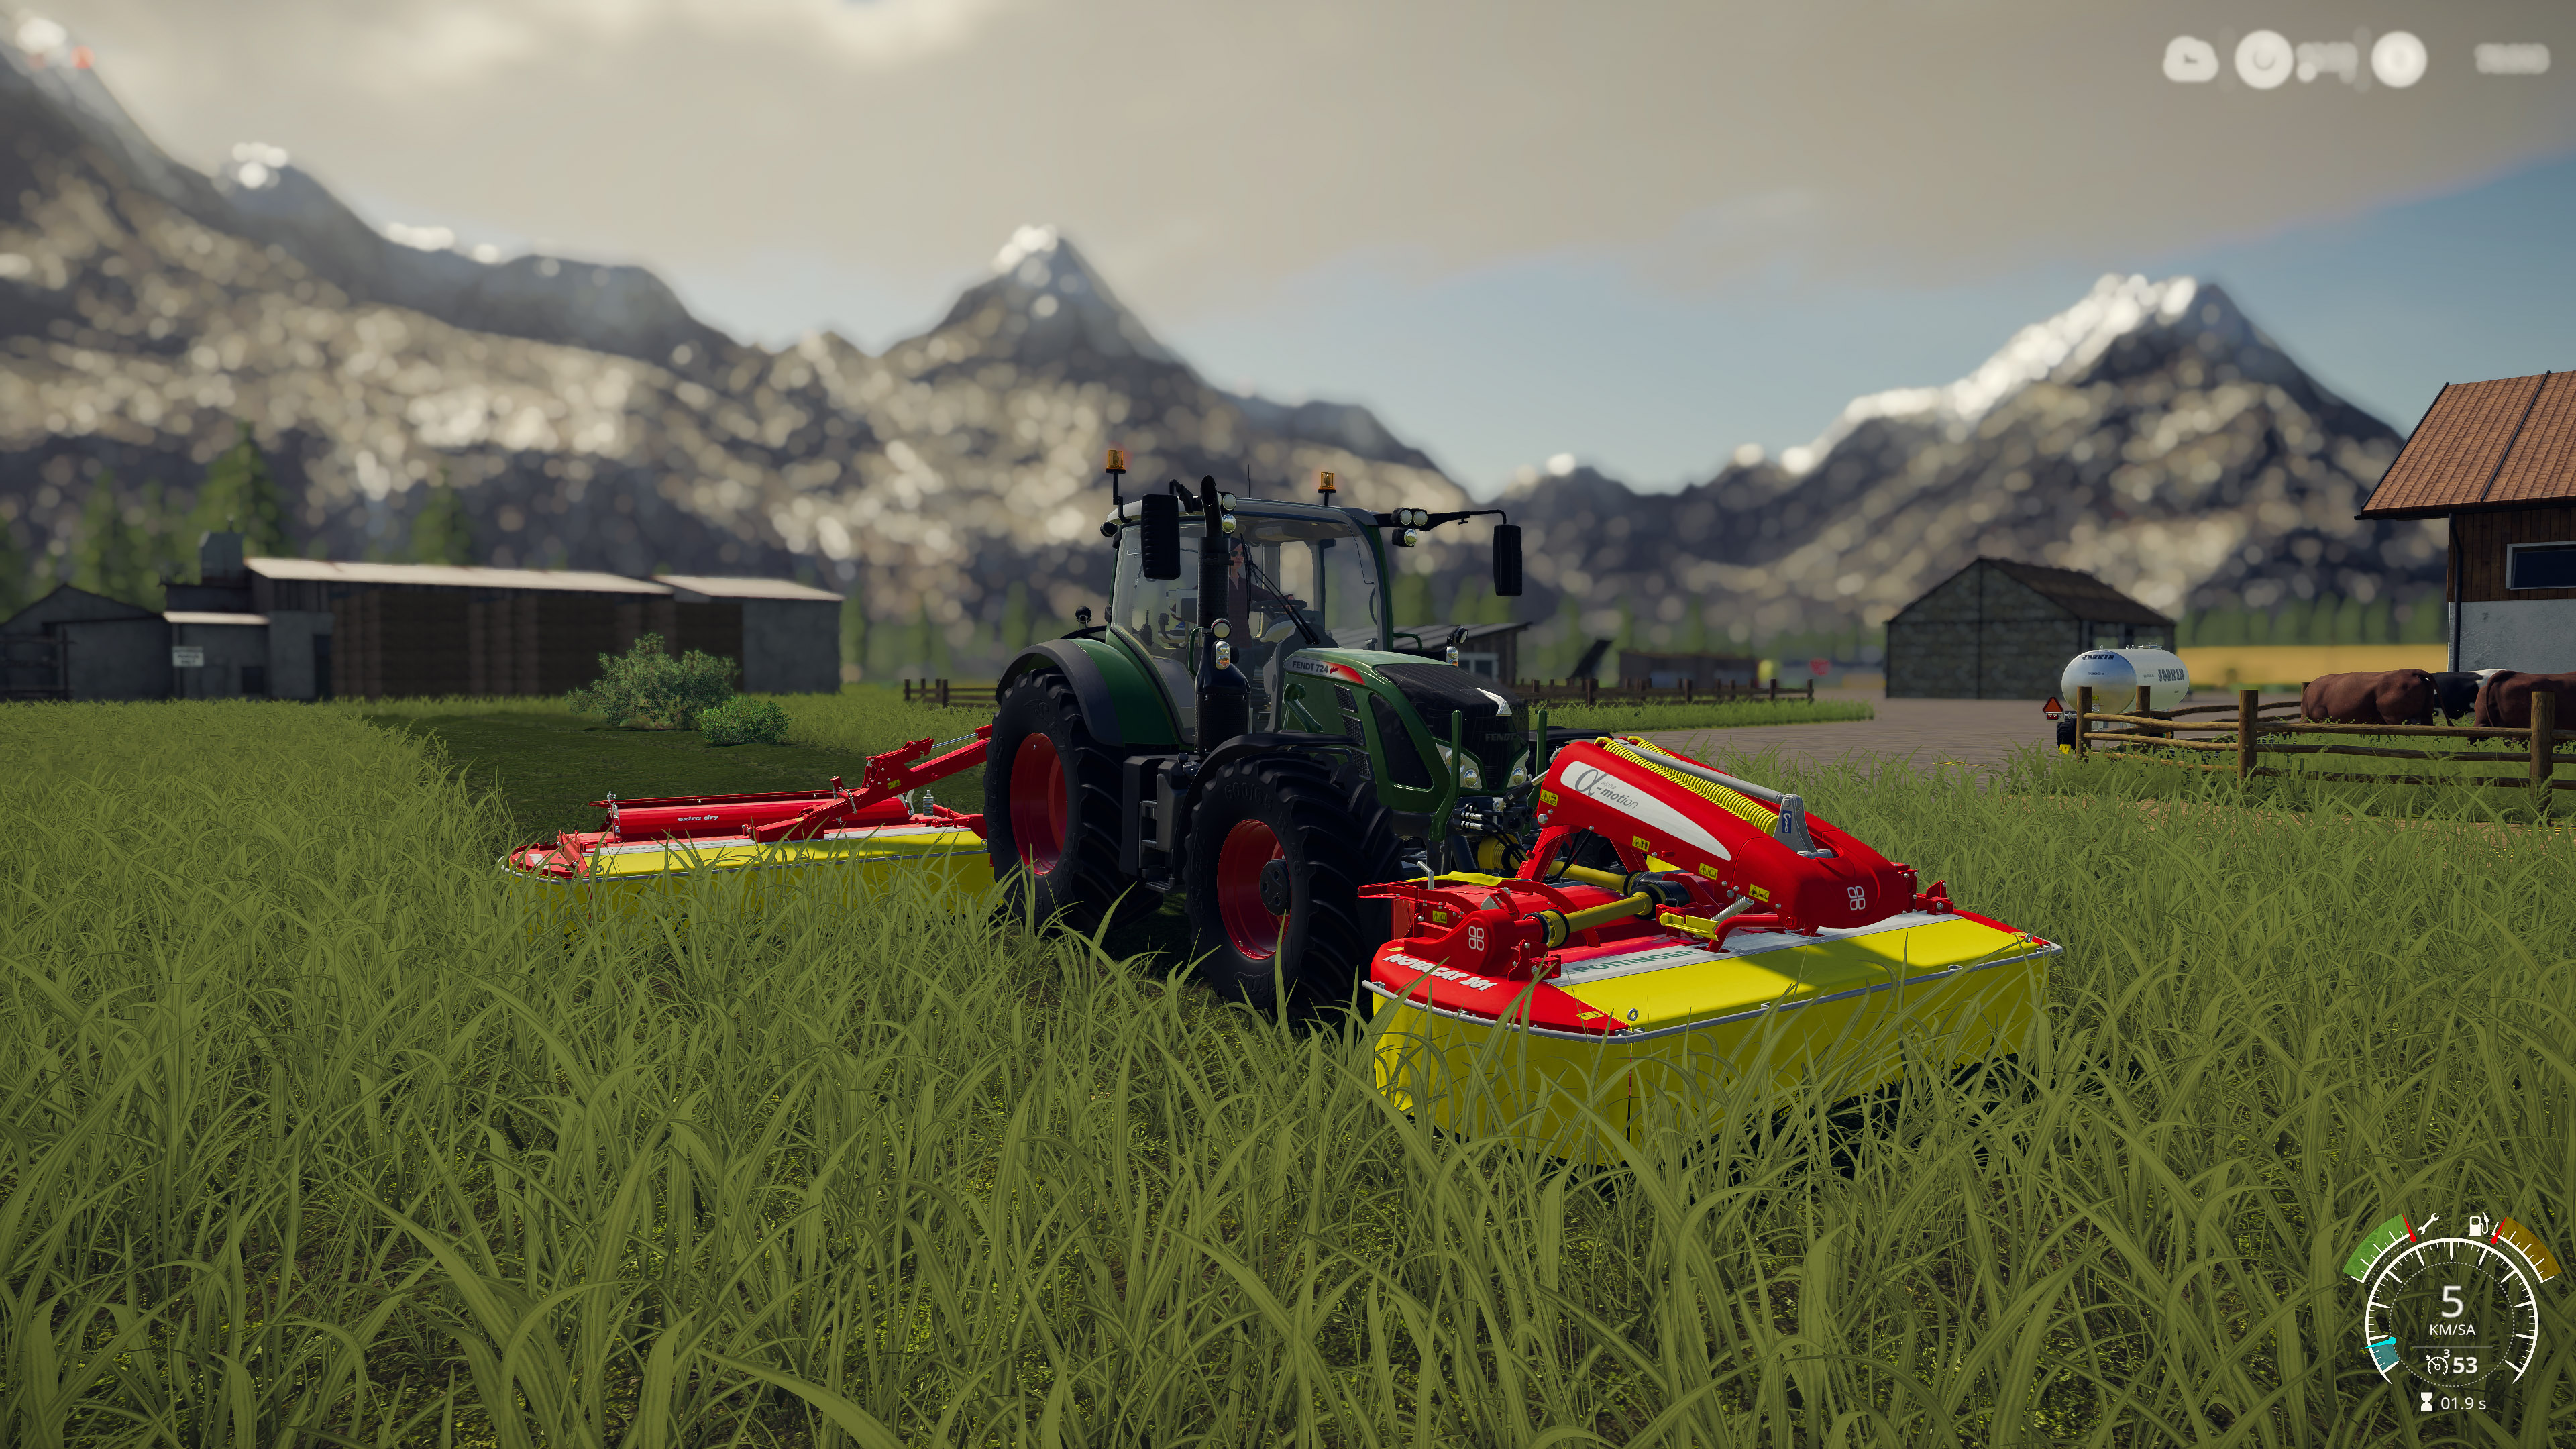 Farming Farming Simulator Farming Simulator 2019 Video Game Art Oats Field Green Tractors Cow Sheep 3840x2160